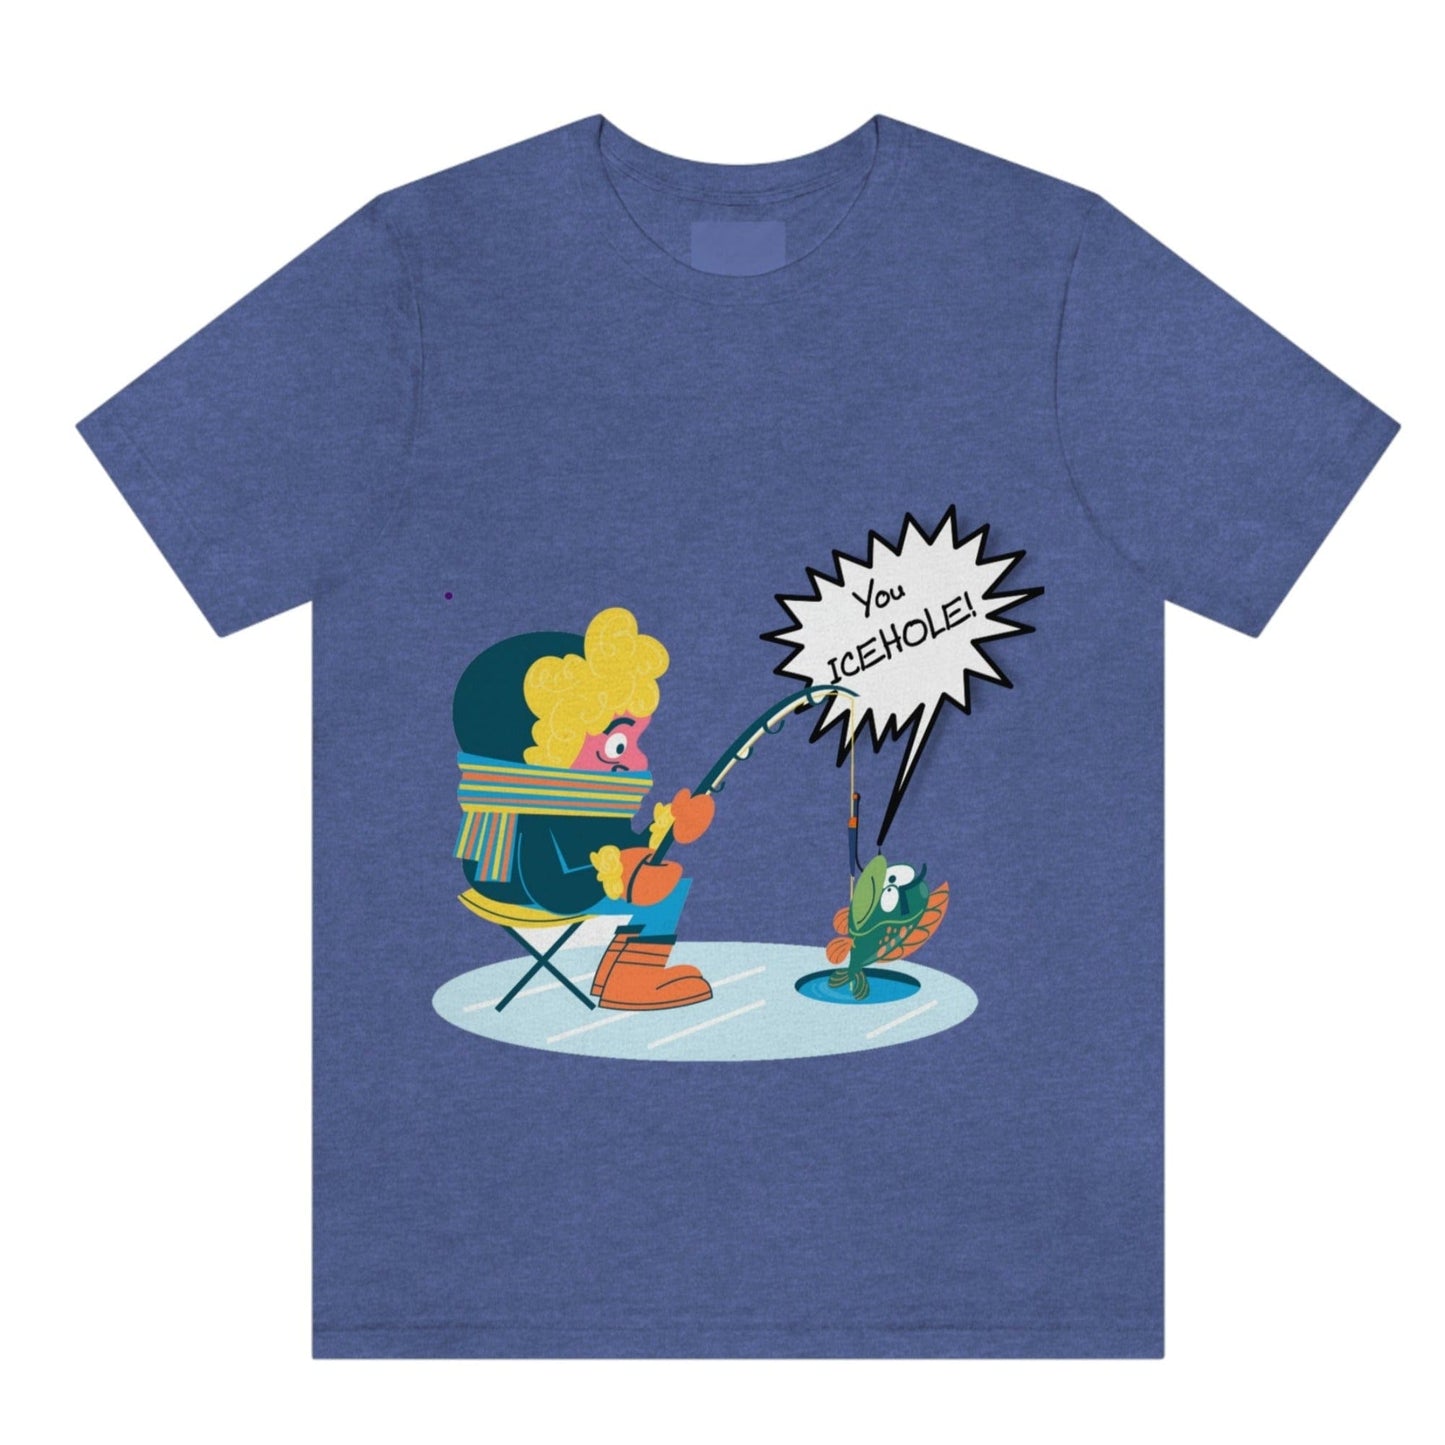 Ironic Funny Ice Fishing T Shirt, Fun Silly Goofy Shirt, Soft Bella Canvas